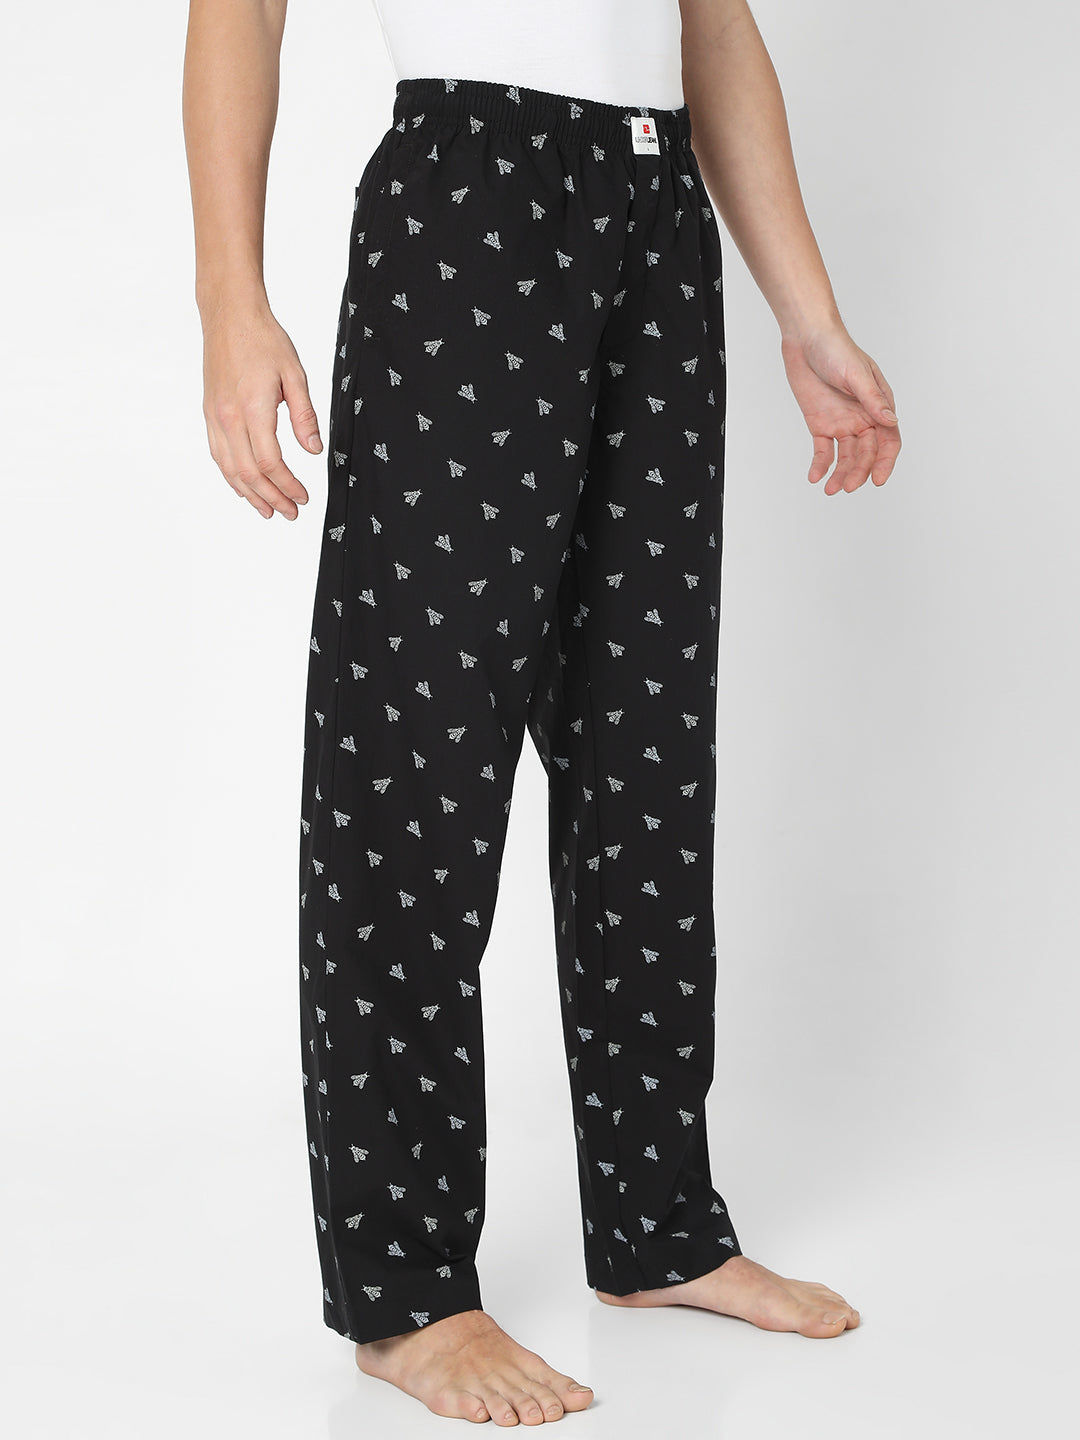 Polo Ralph Lauren Pony-Print Woven Pajama Pants